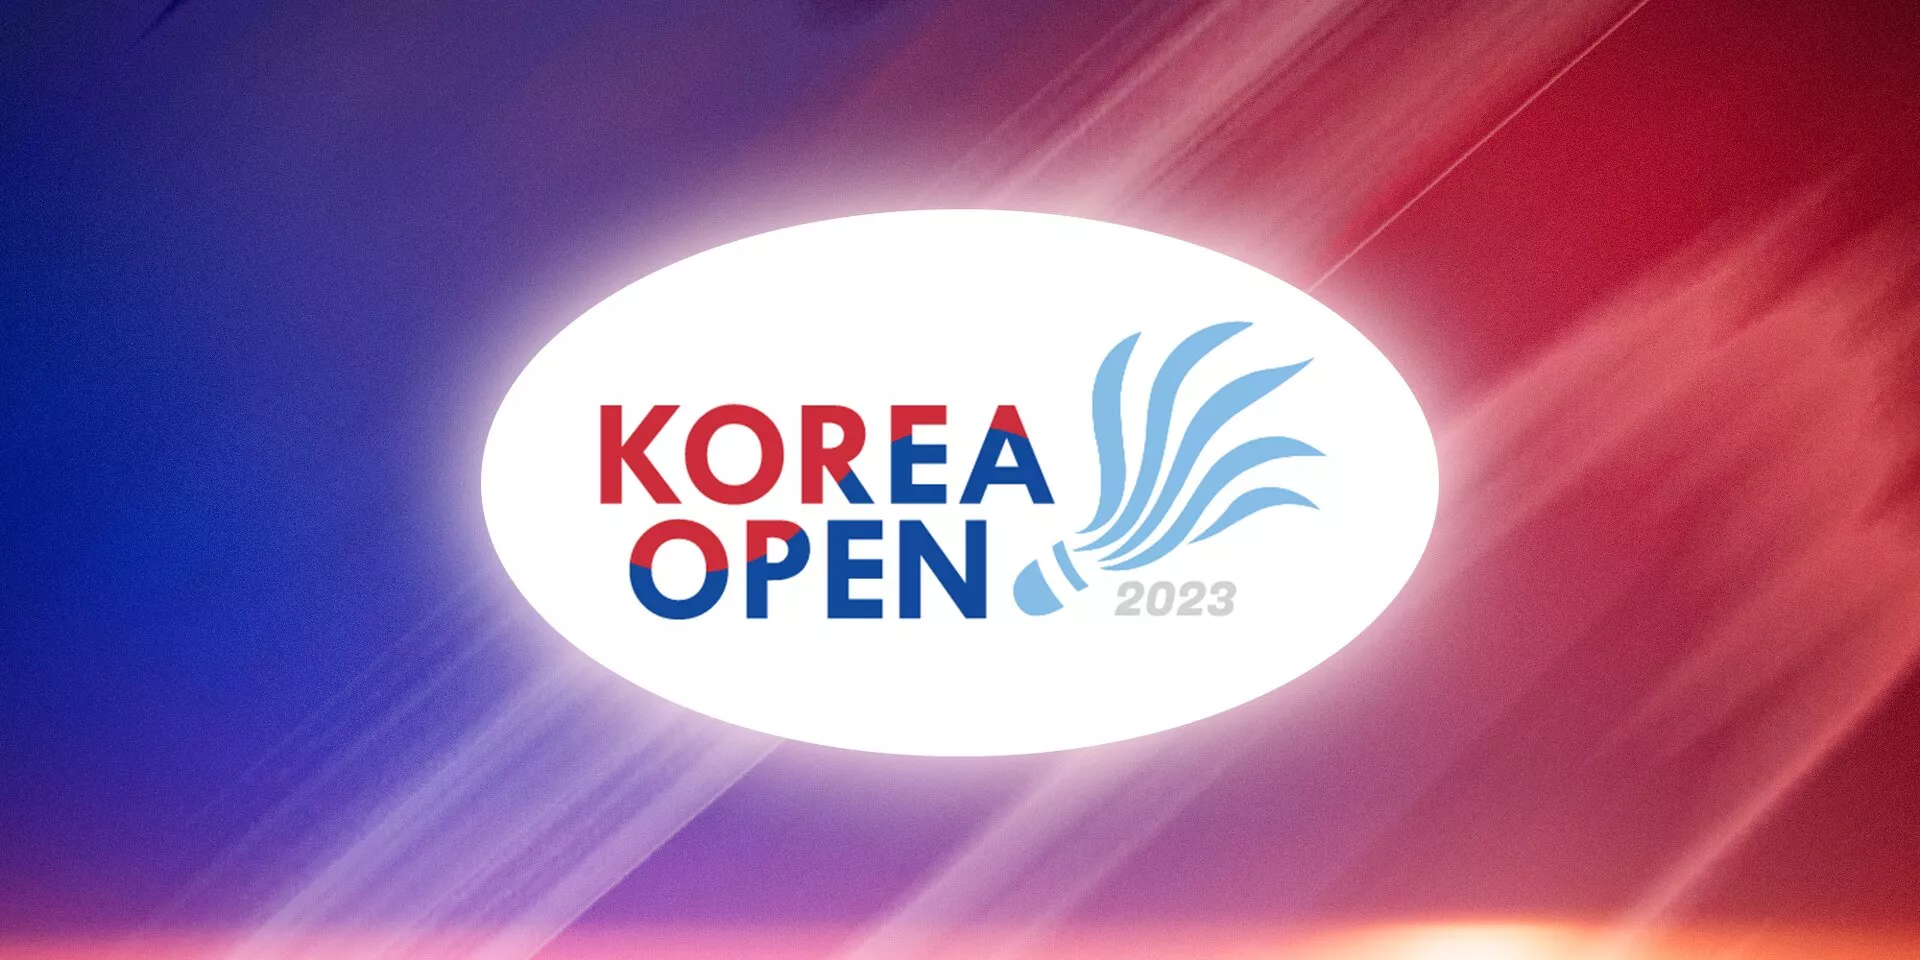 Korean Championship 2023 Day3 